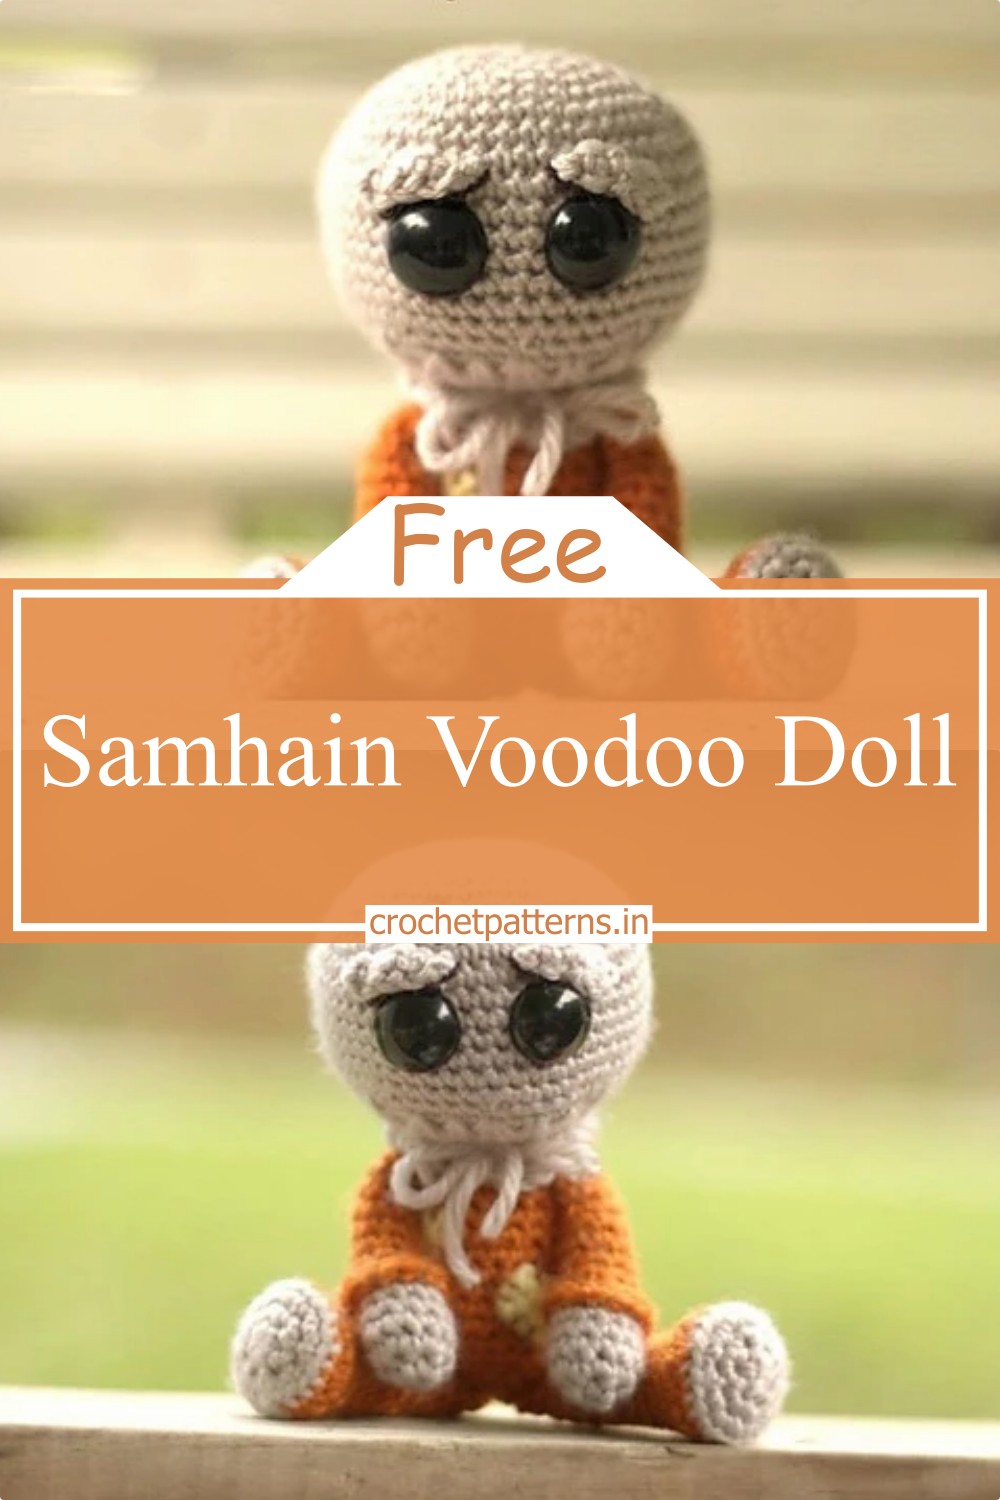 Samhain Voodoo Doll